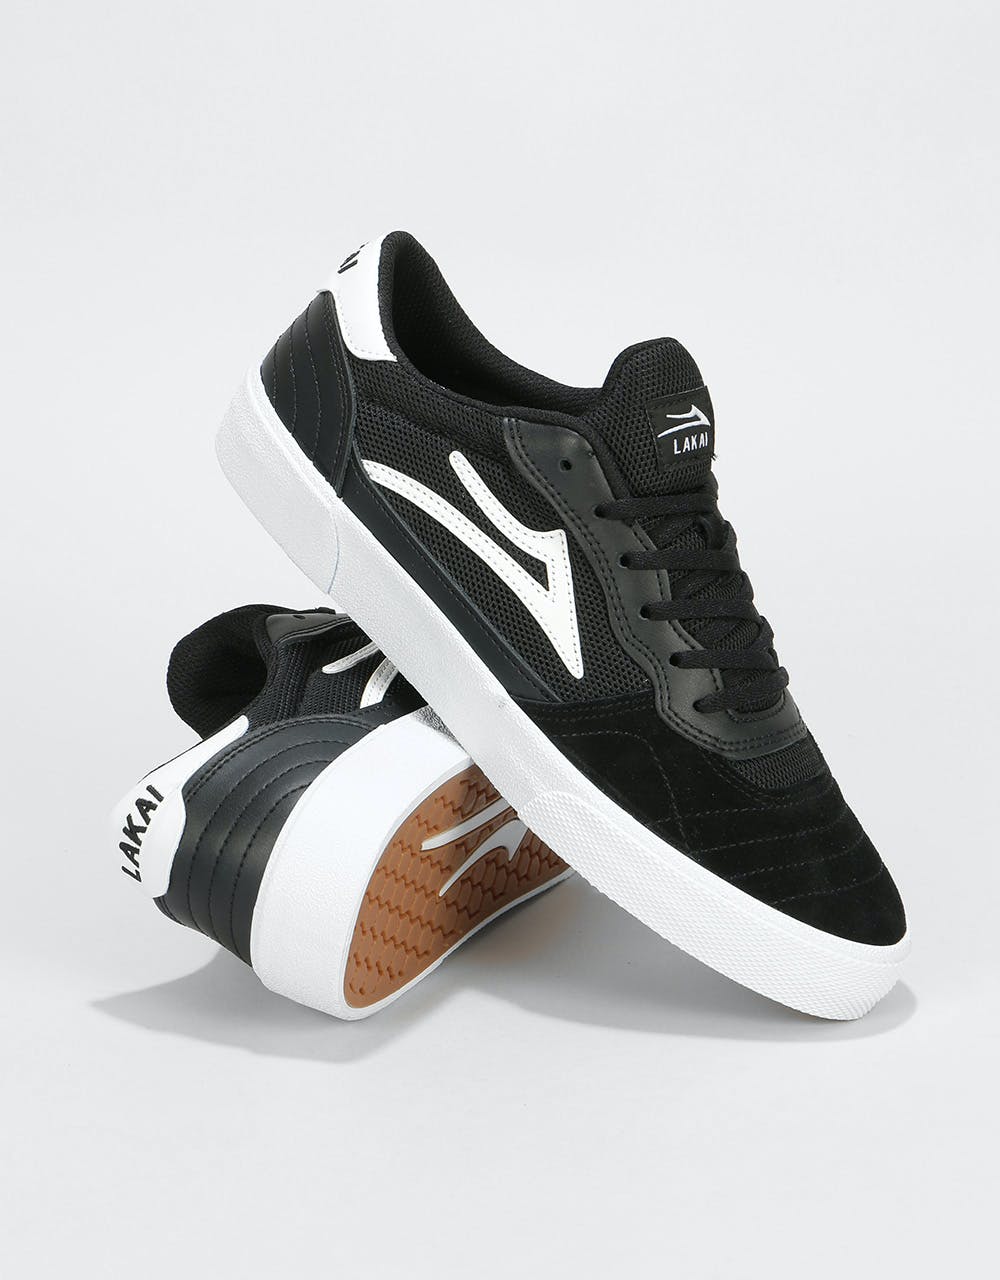 Lakai Cambridge Skate Shoes - Black/White Suede